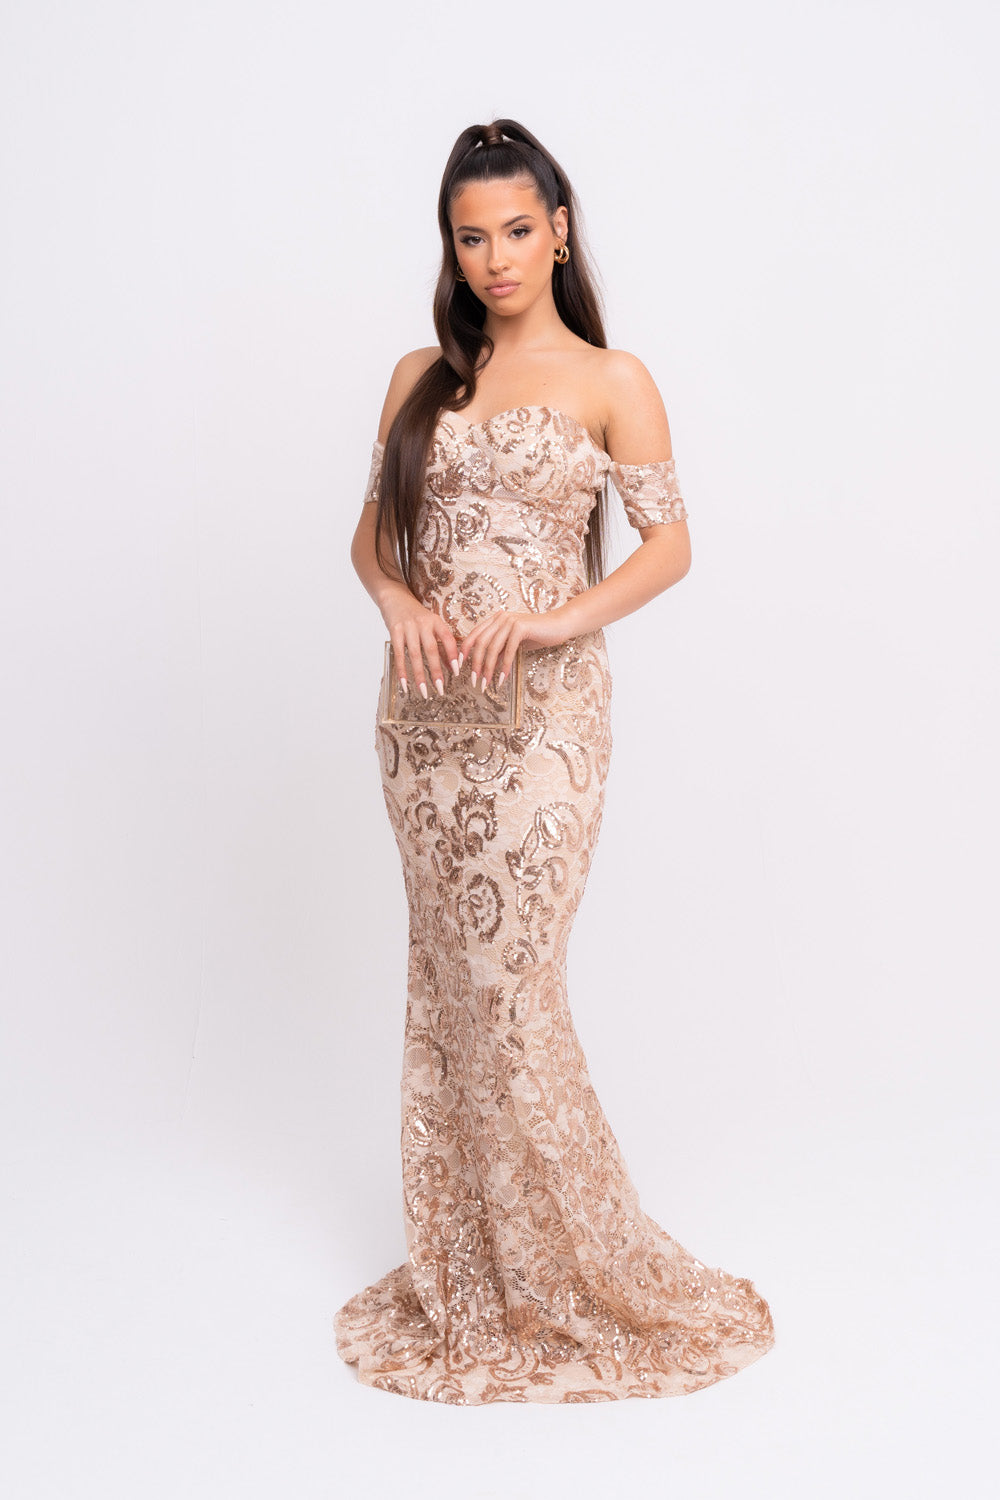 Daydreamer Rose Gold Floral Lace Sequin Embellished Off The Shoulder Bardot Cuff Maxi Dress